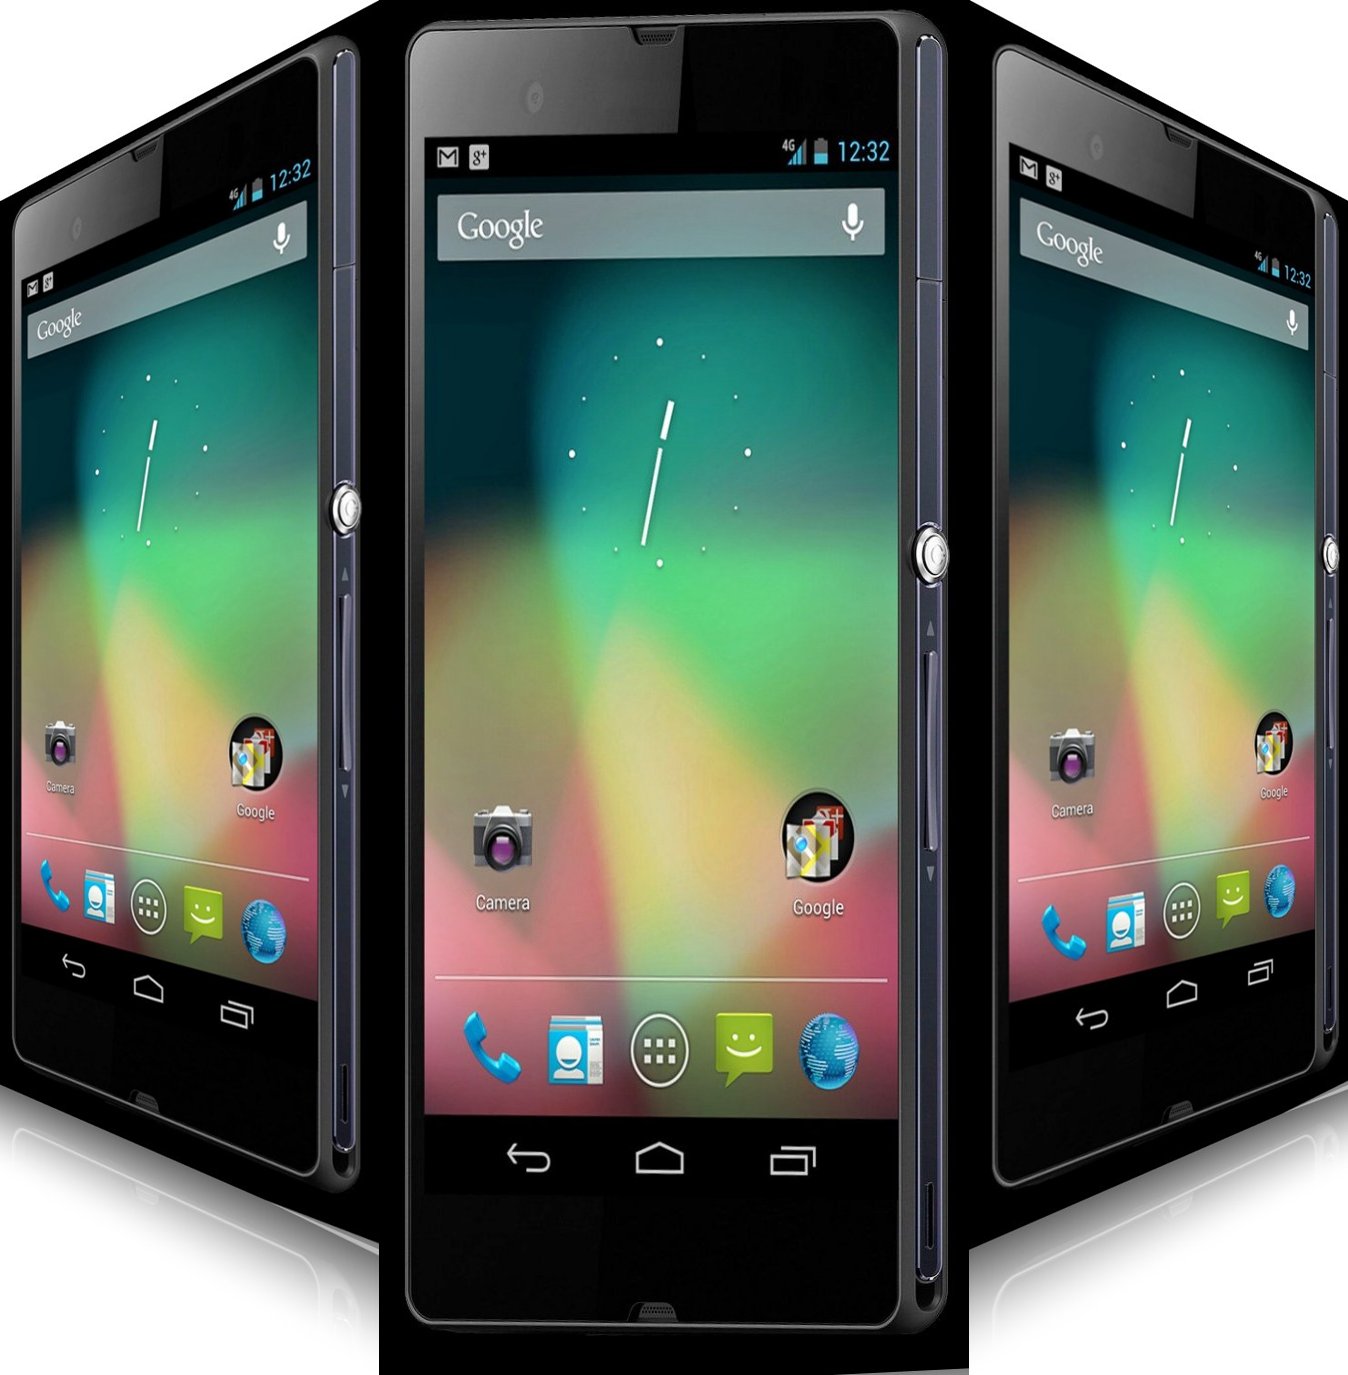 Nexus 5 price in india